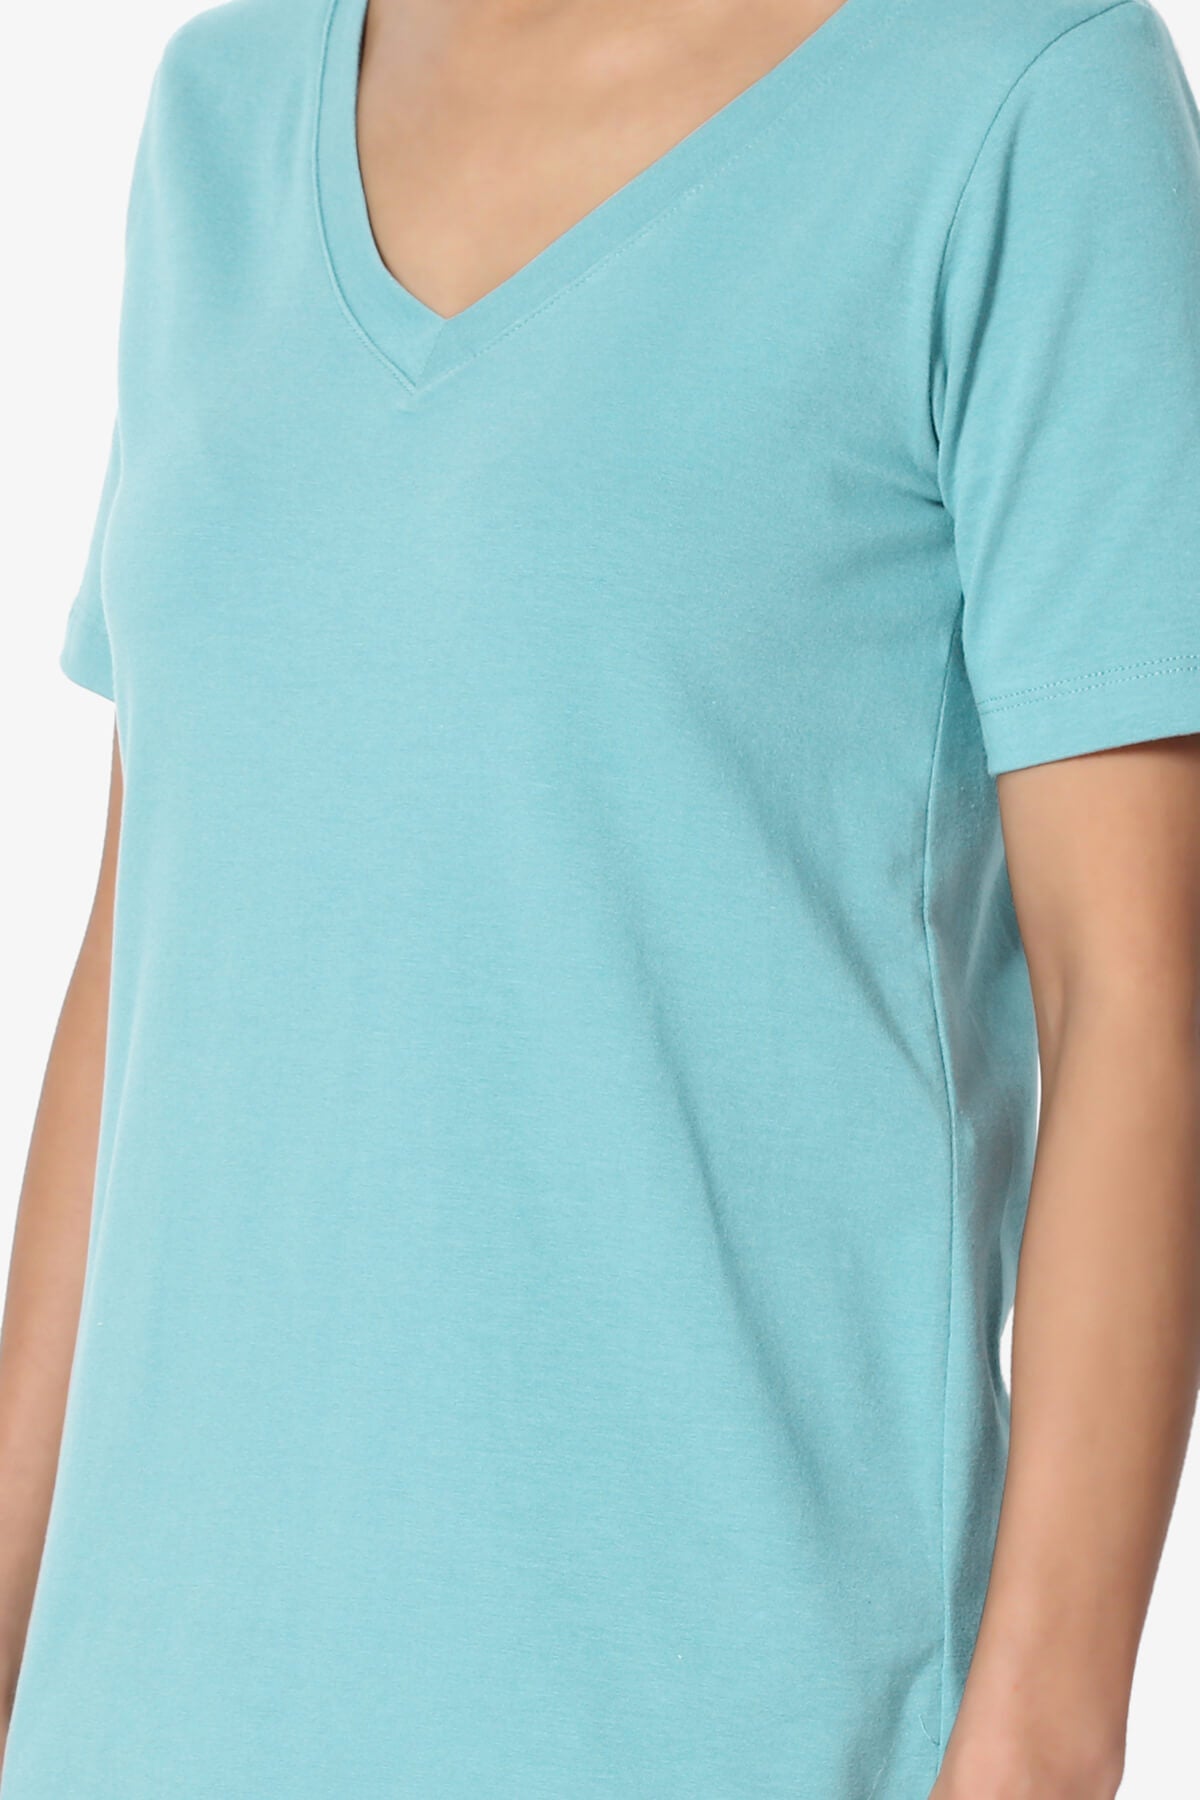 Elora V-Neck Short Sleeve T-Shirt MILKY BLUE_5